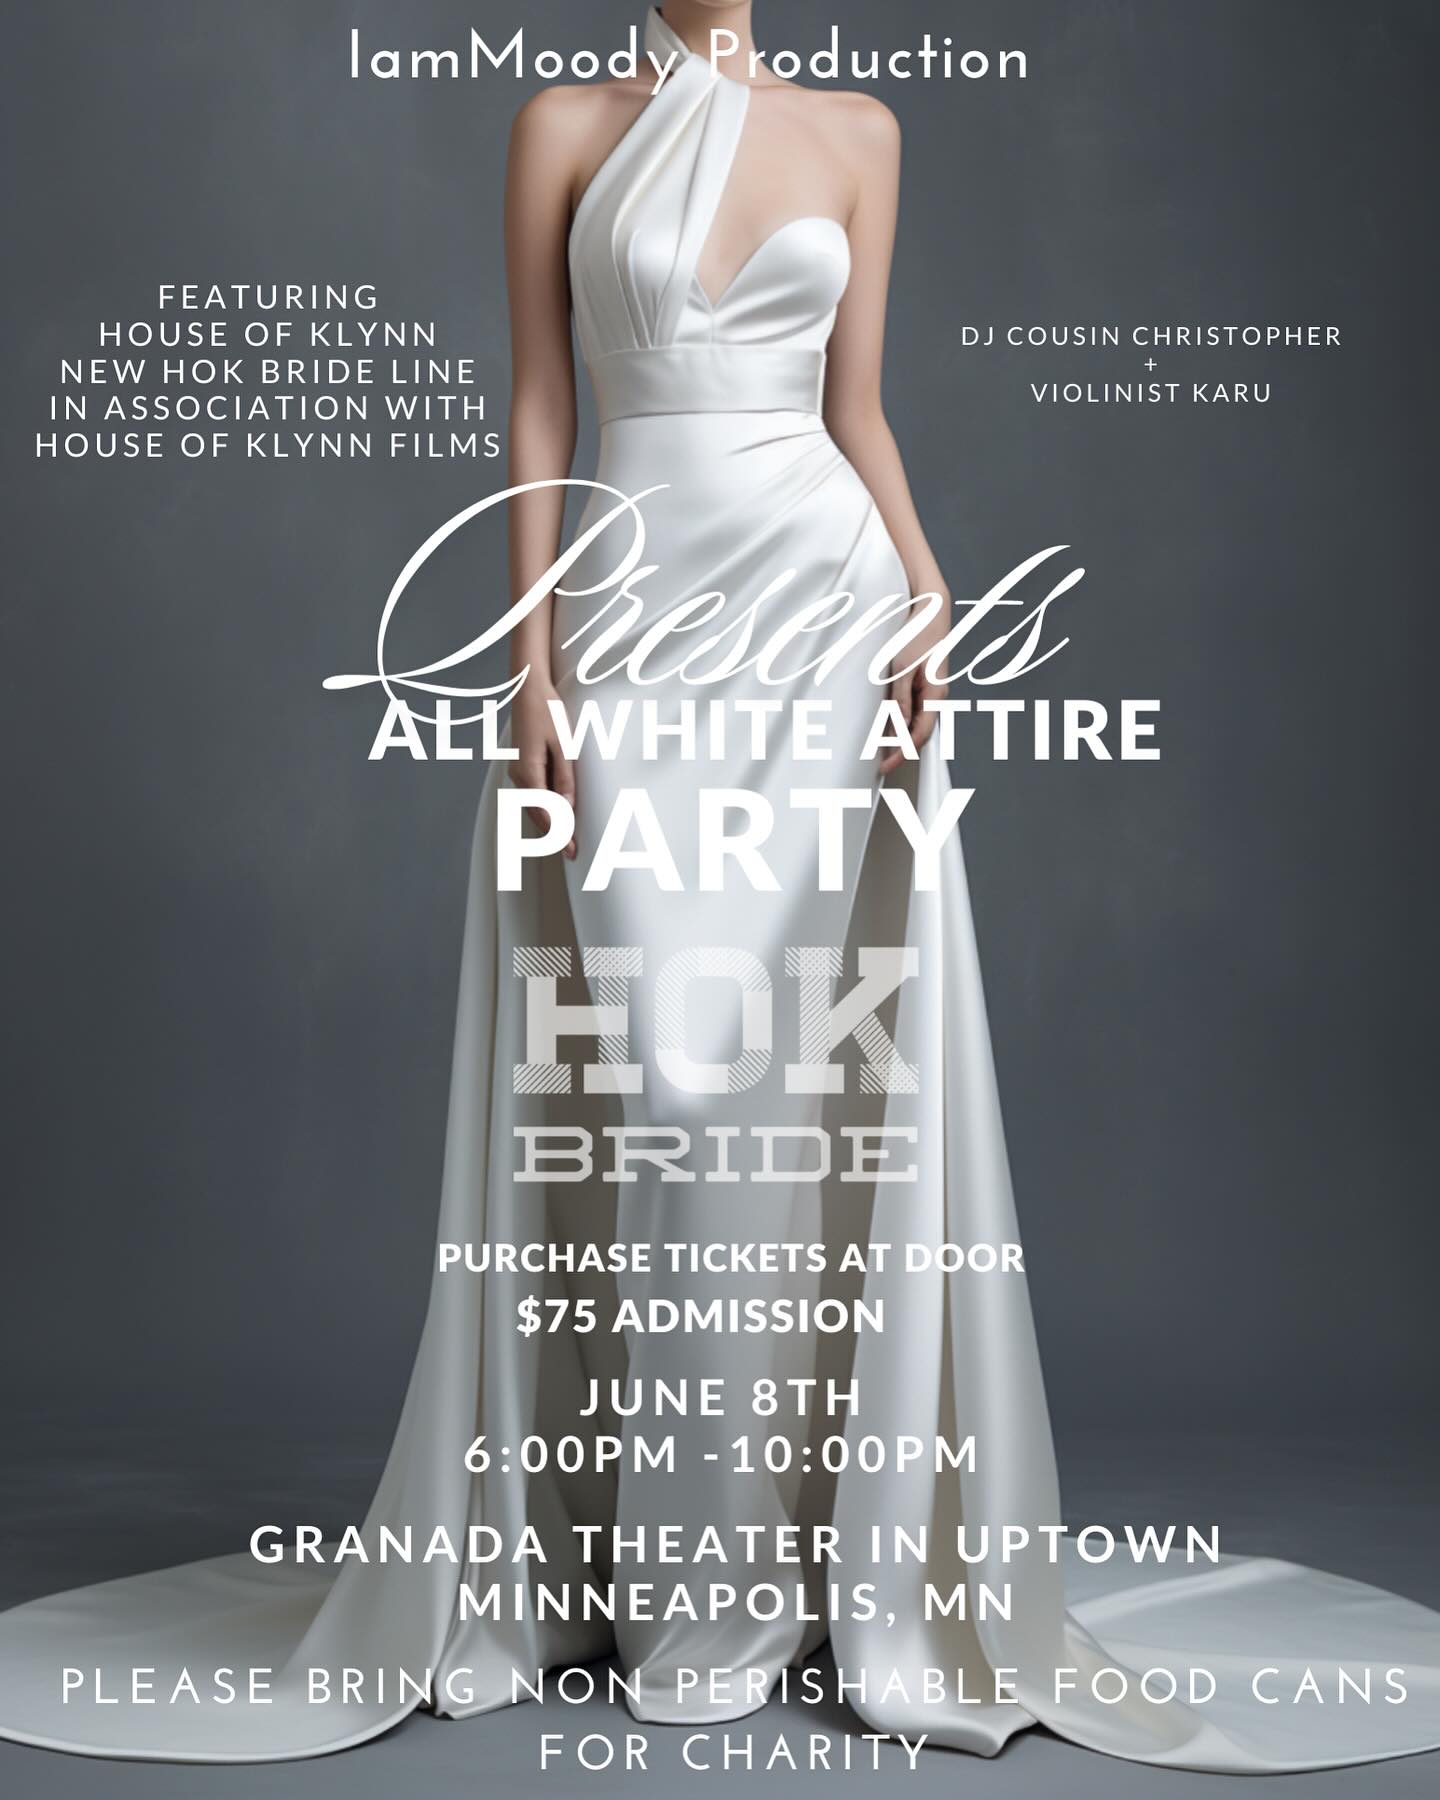 All White Attire Party & House of KLynn Fashion Show